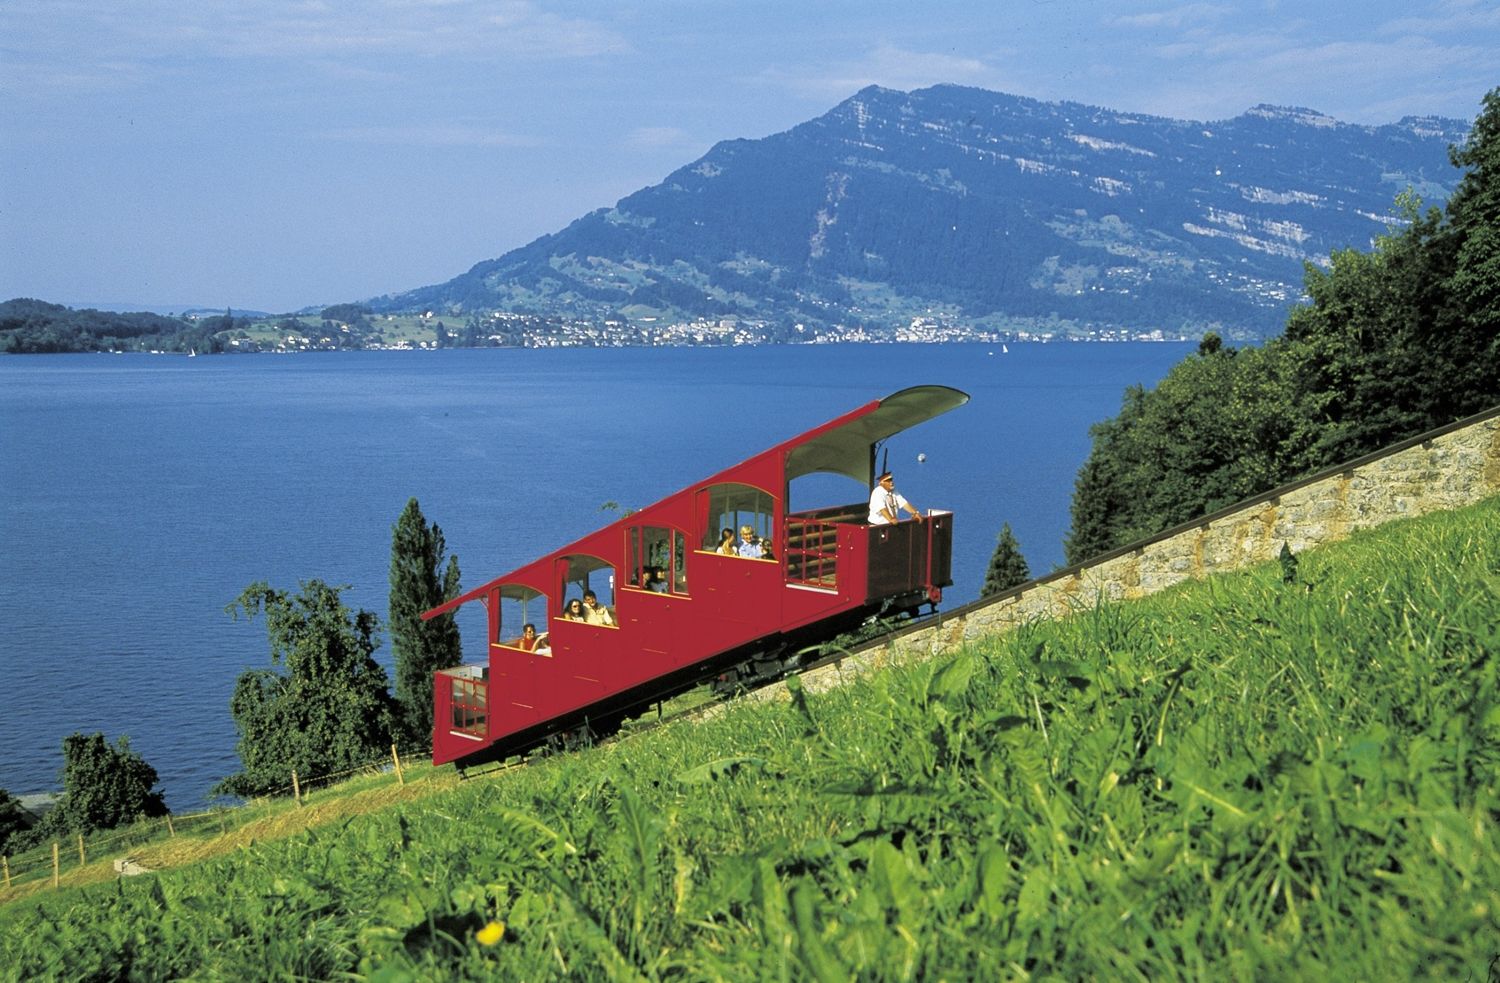 Funicular, cliff walk and mechanical lifton the Bürgenstock | Switzerland Tourism